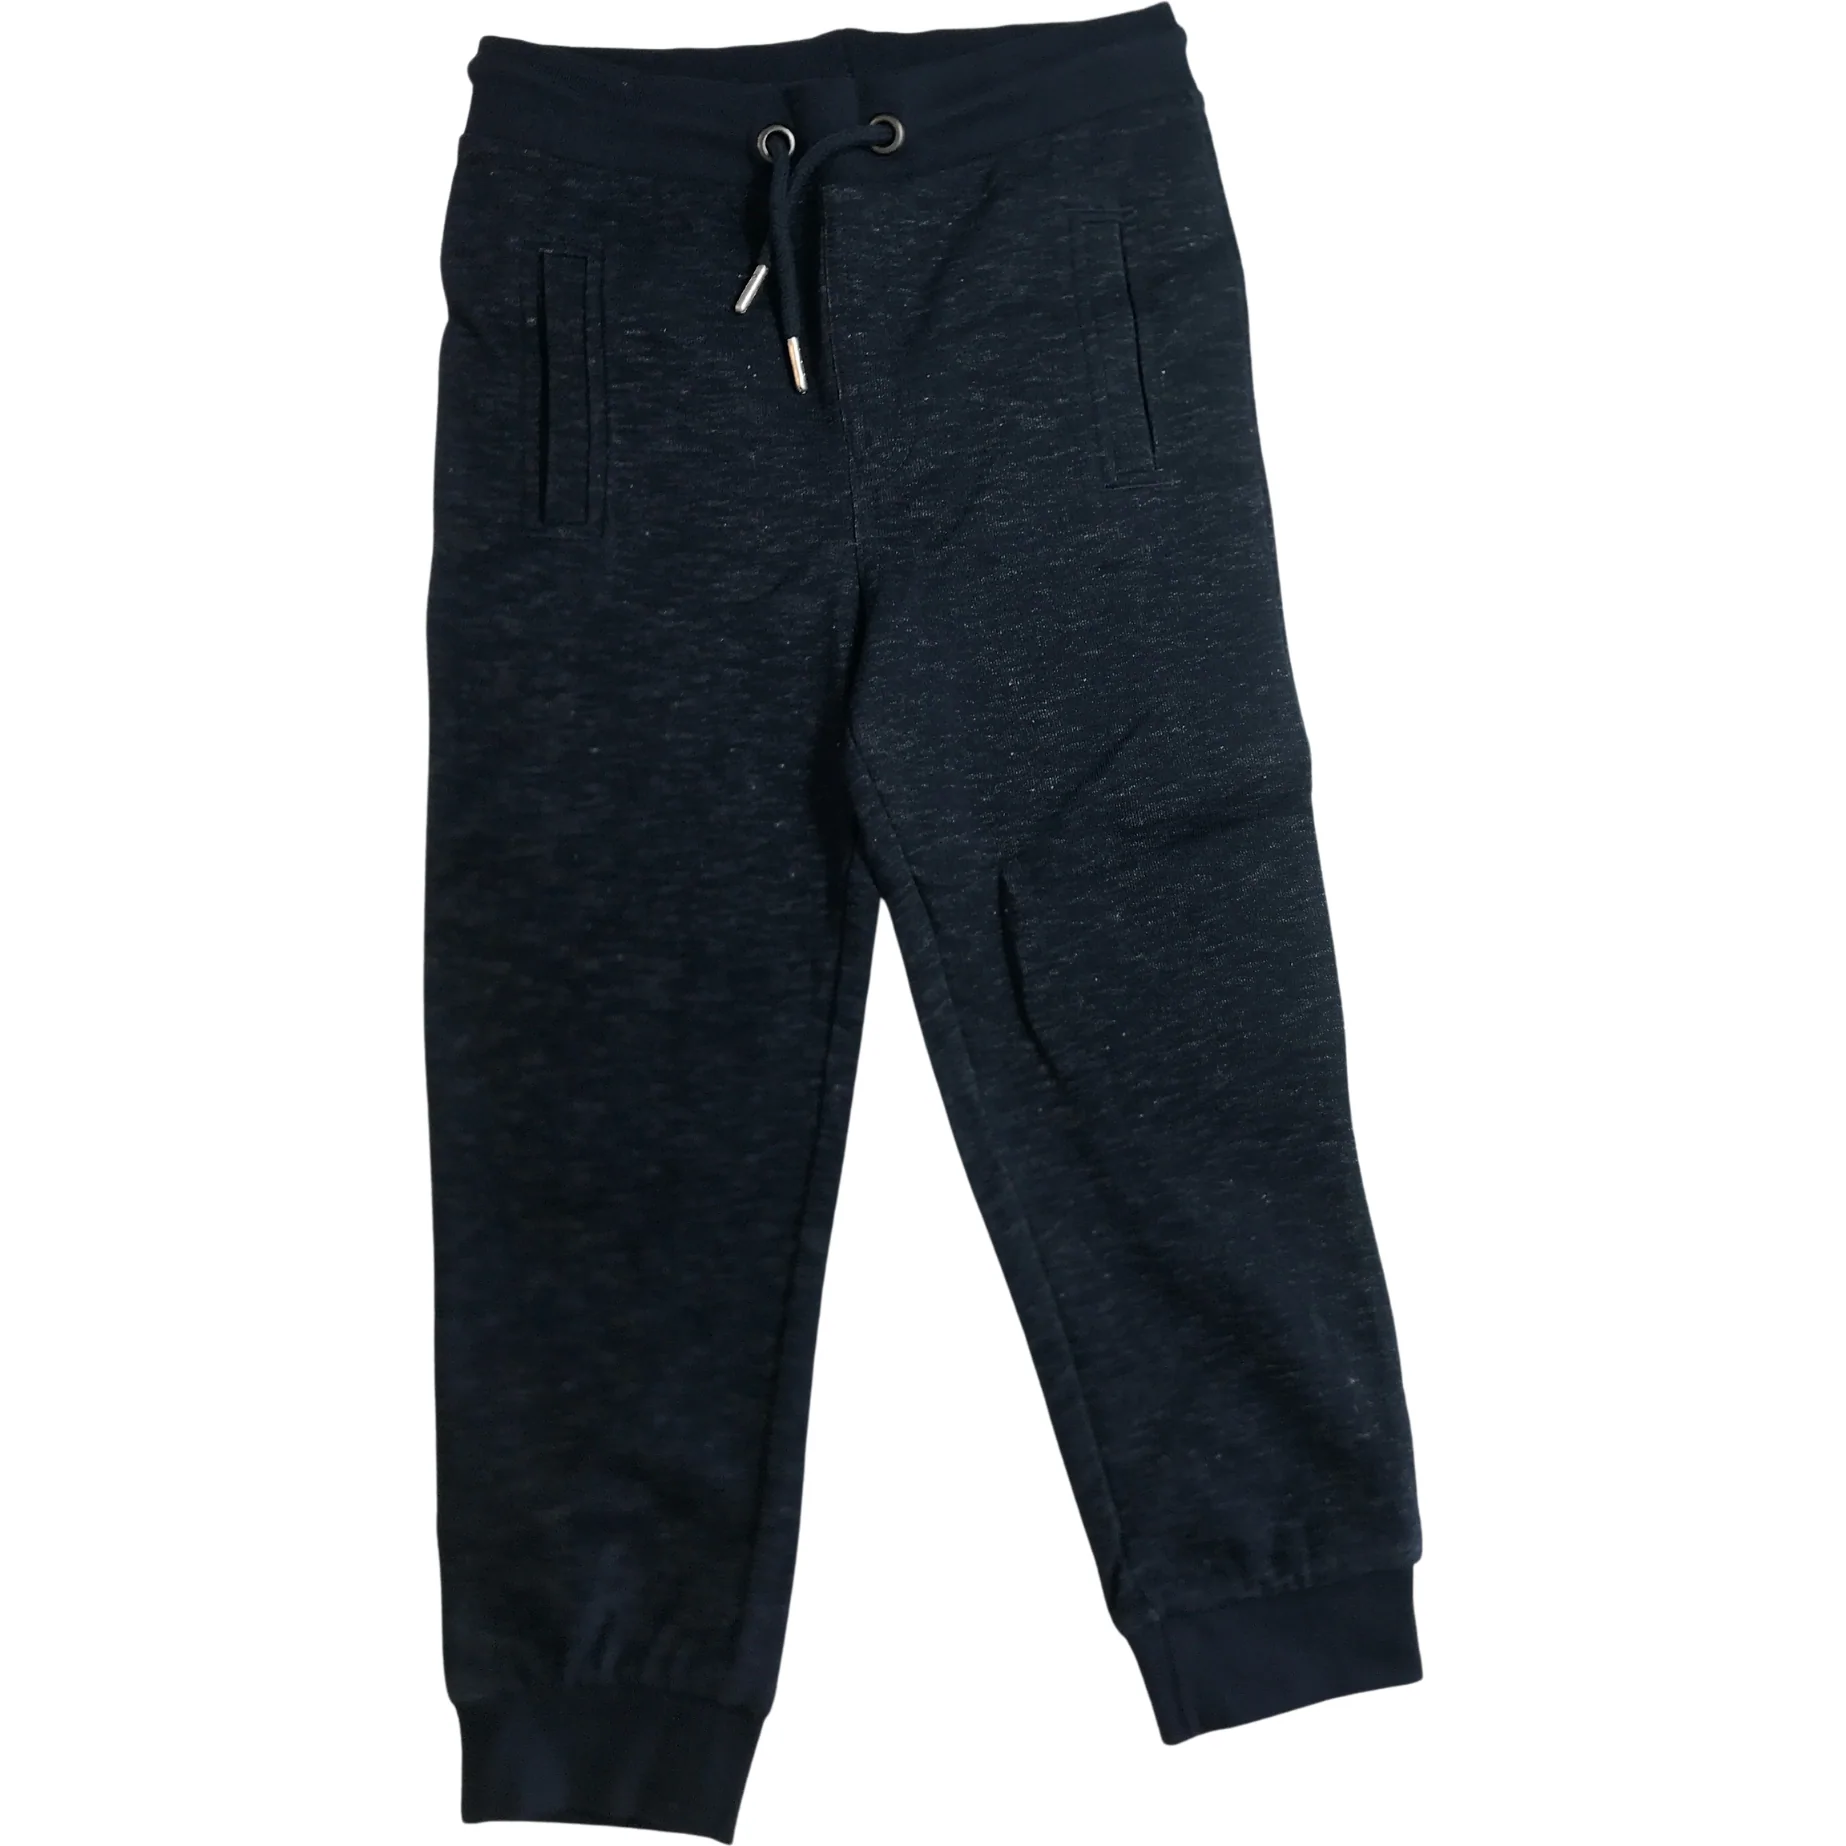 Bob Boy's Joggers: Boy's Sweatpants / Blue / Size 4T